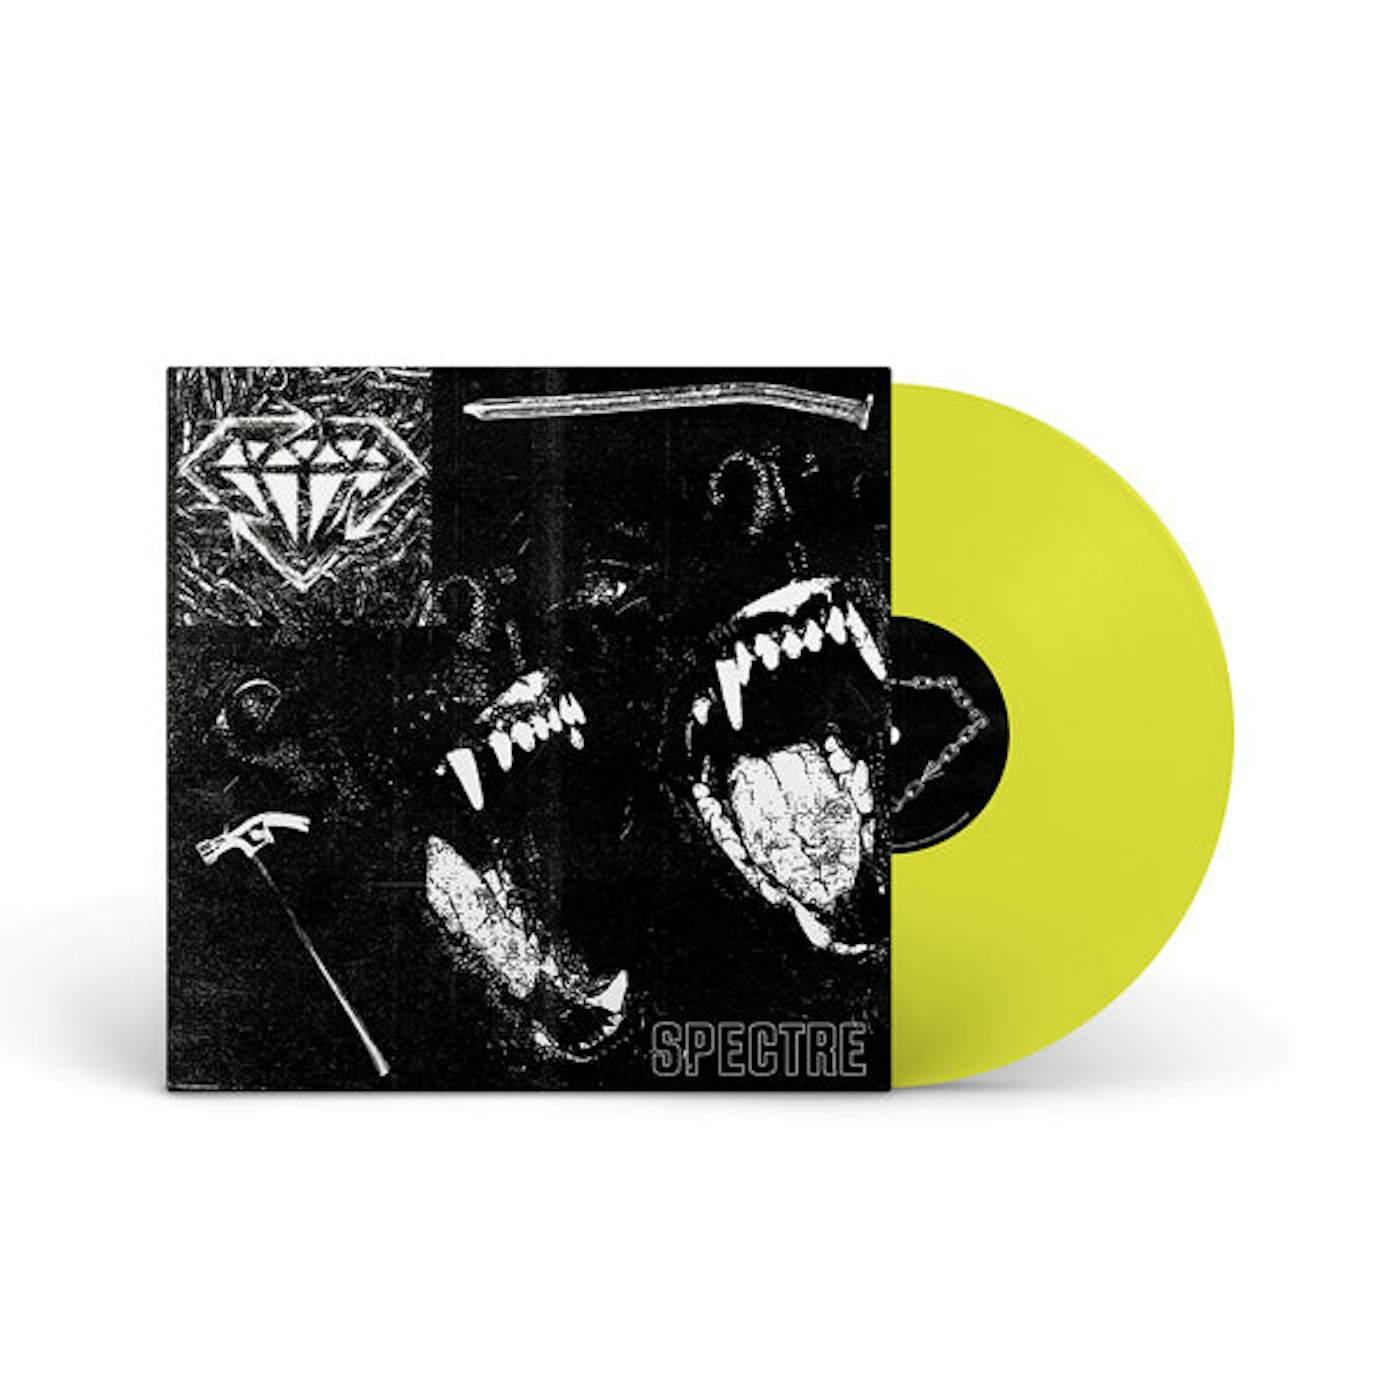 Stick To Your Guns LP - Spectre (Highlighter Yellow)(Uk Exclusive) (Vinyl)